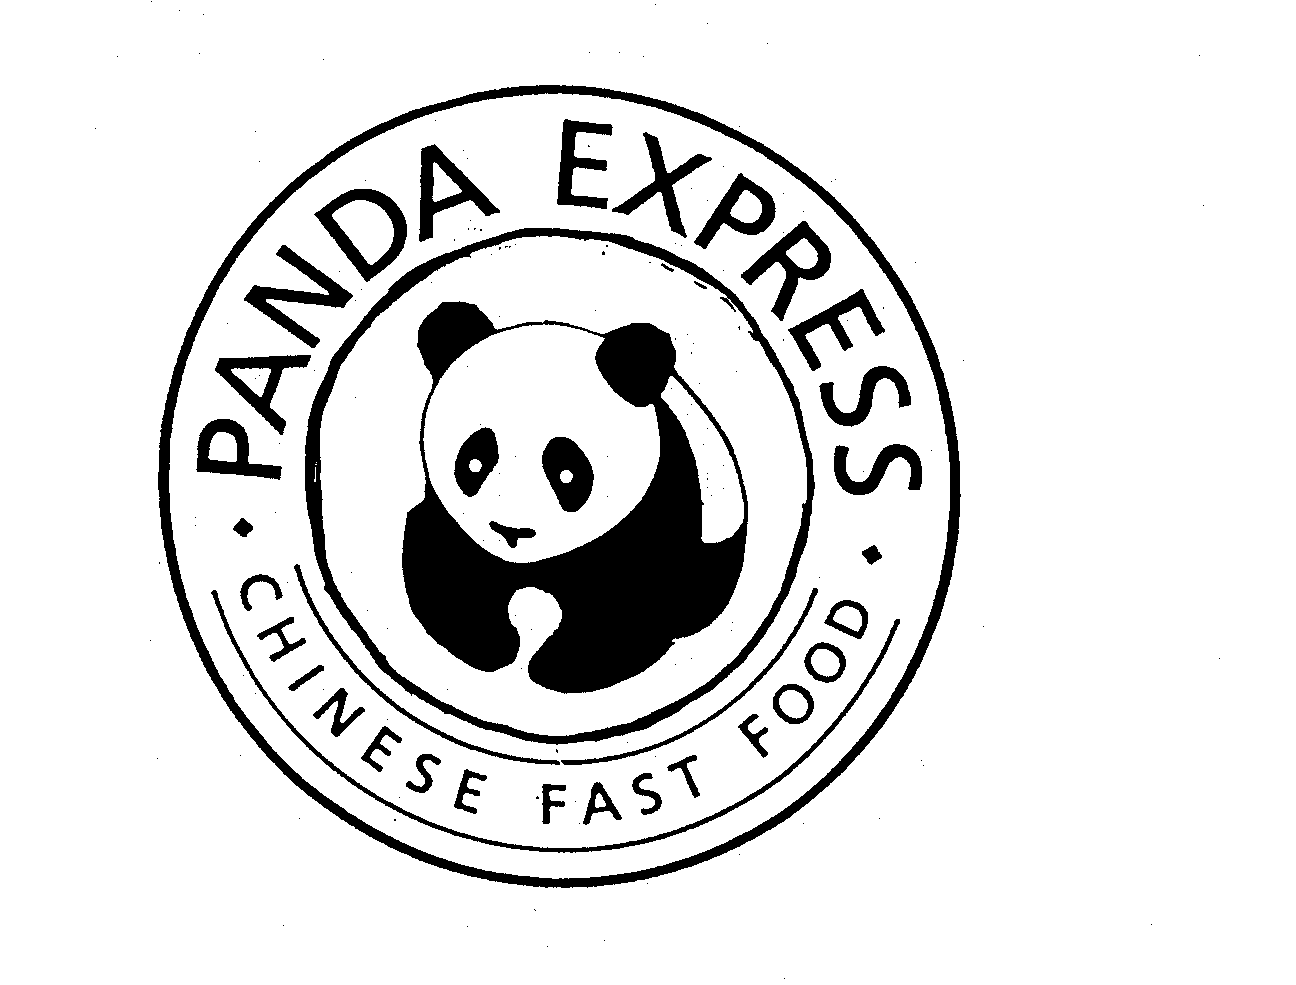  PANDA EXPRESS CHINESE FAST FOOD